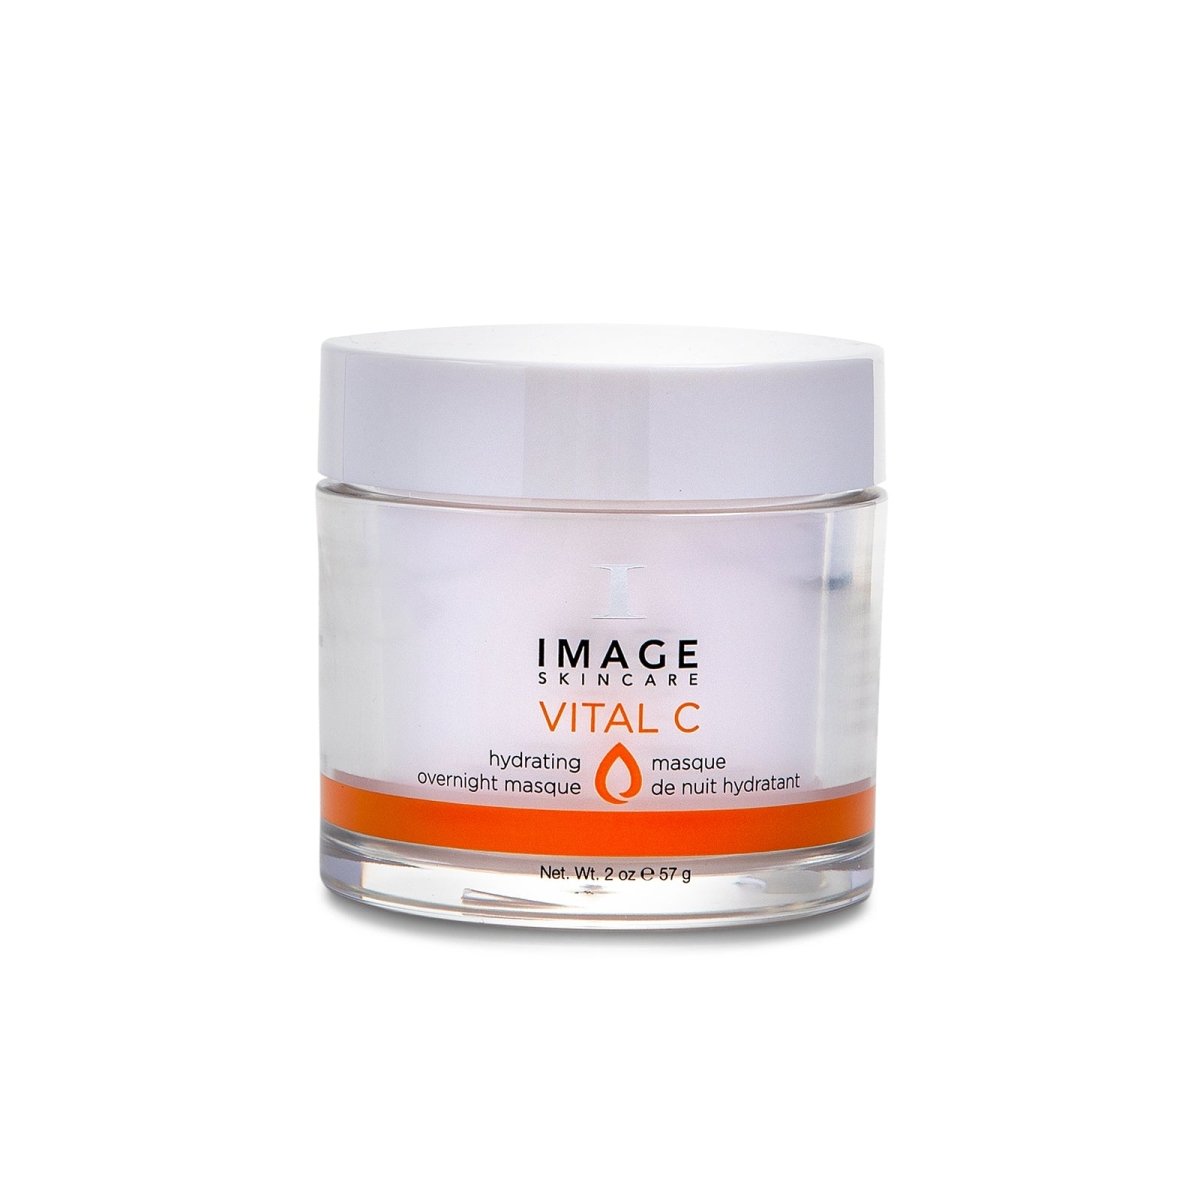 IMAGE Skincare Vital C Hydrating Overnight Masque